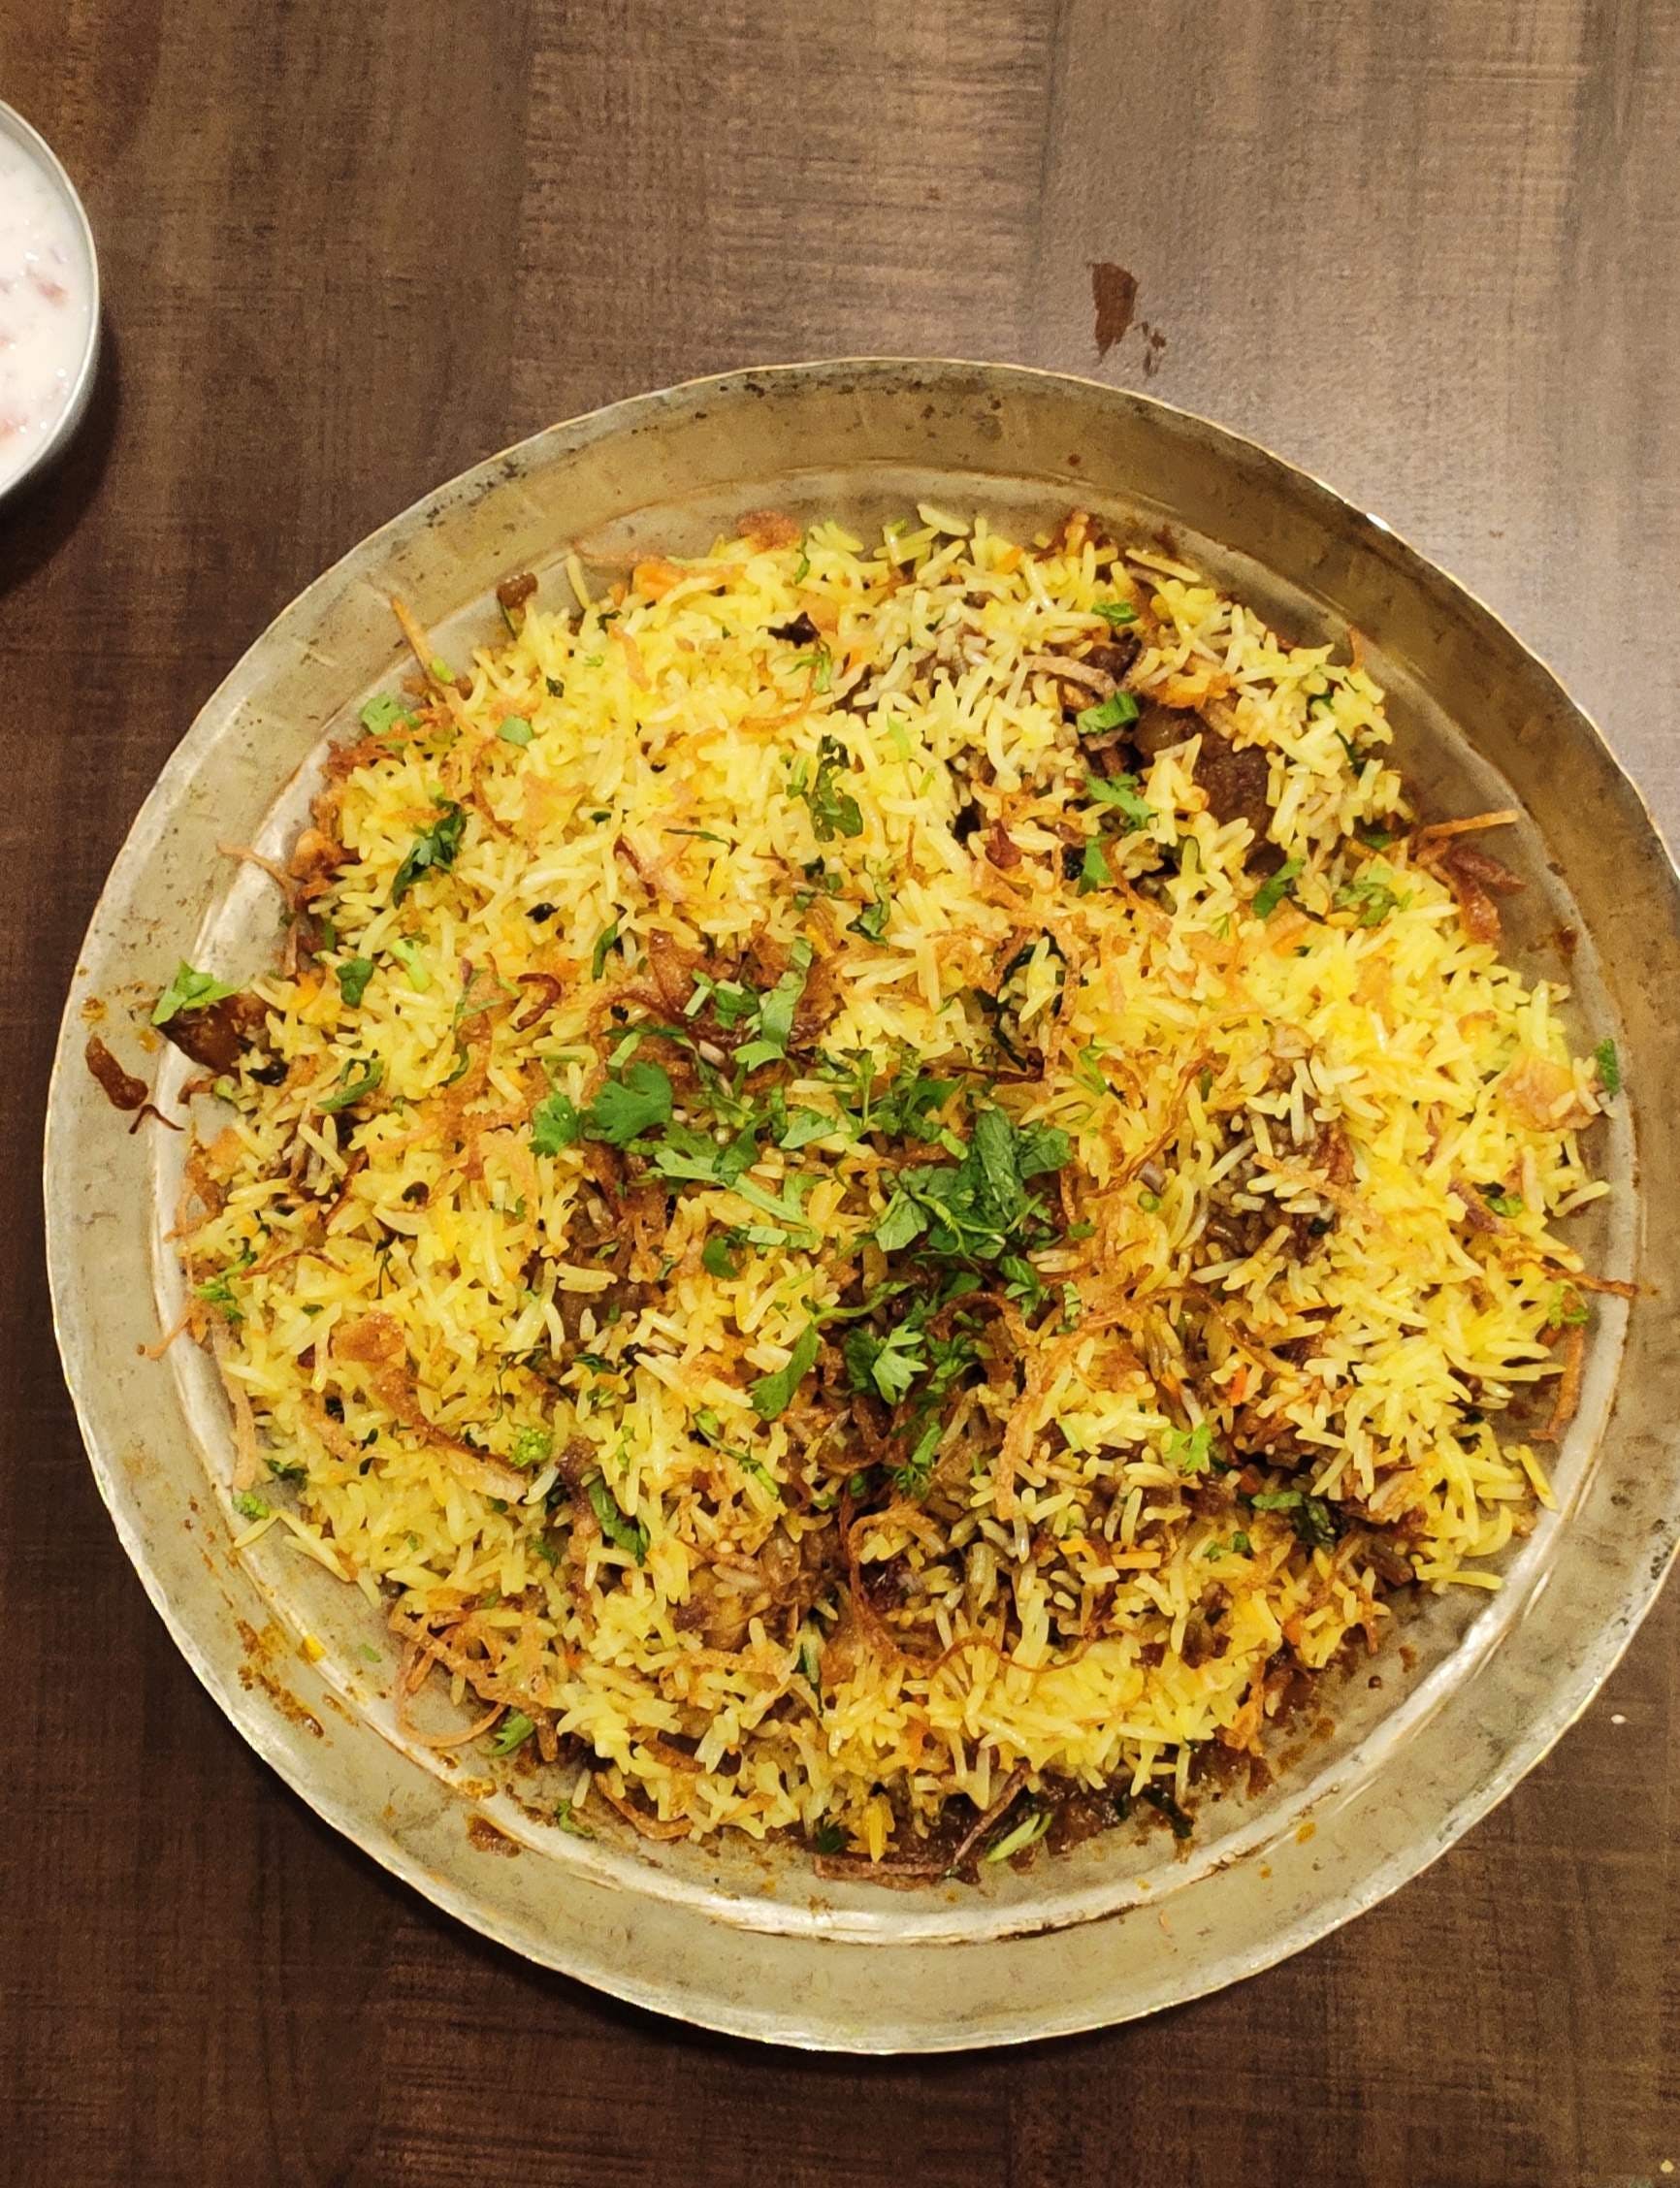 Dish,Food,Cuisine,Ingredient,Biryani,Recipe,Hyderabadi biriyani,Basmati,Pilaf,Produce